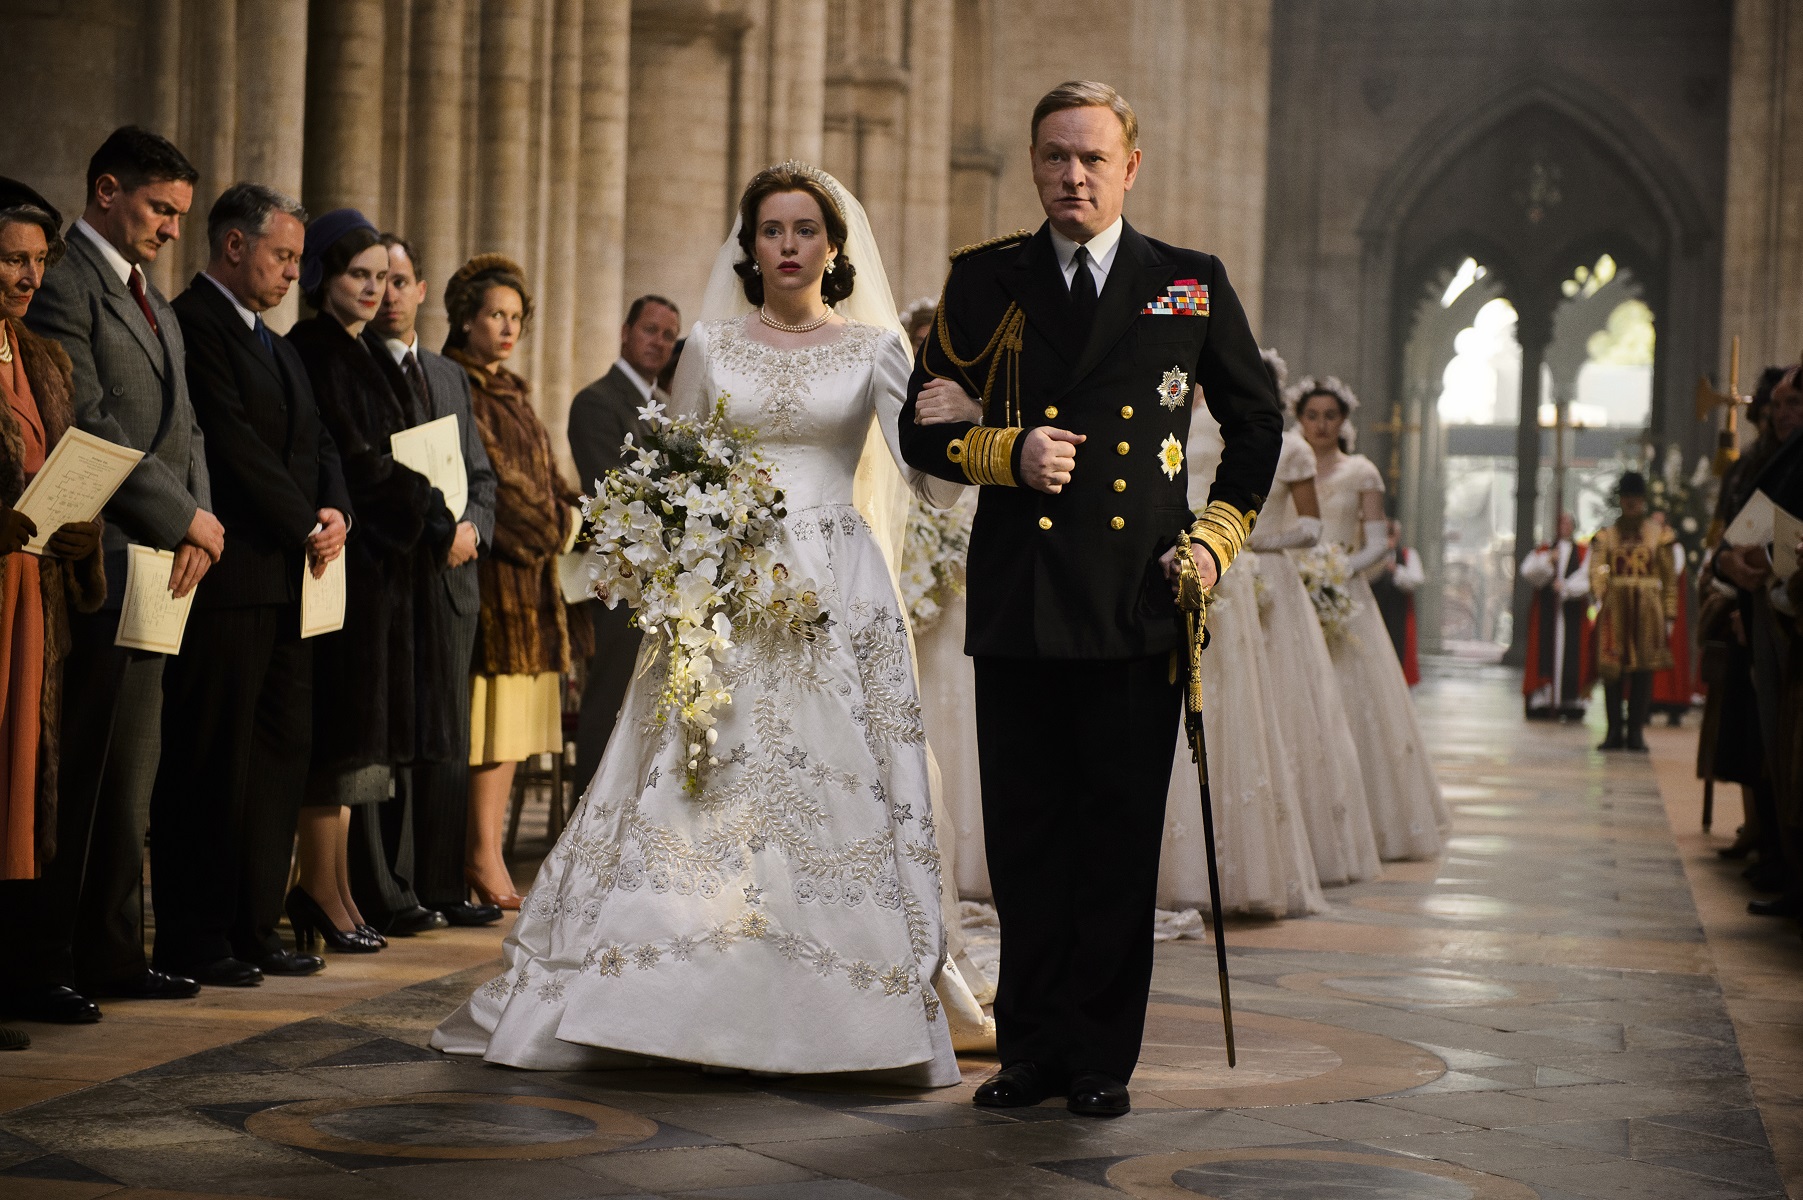 Queen Elizabeth II is walked down the aisle at her wedding in season 1 of 'The Crown'